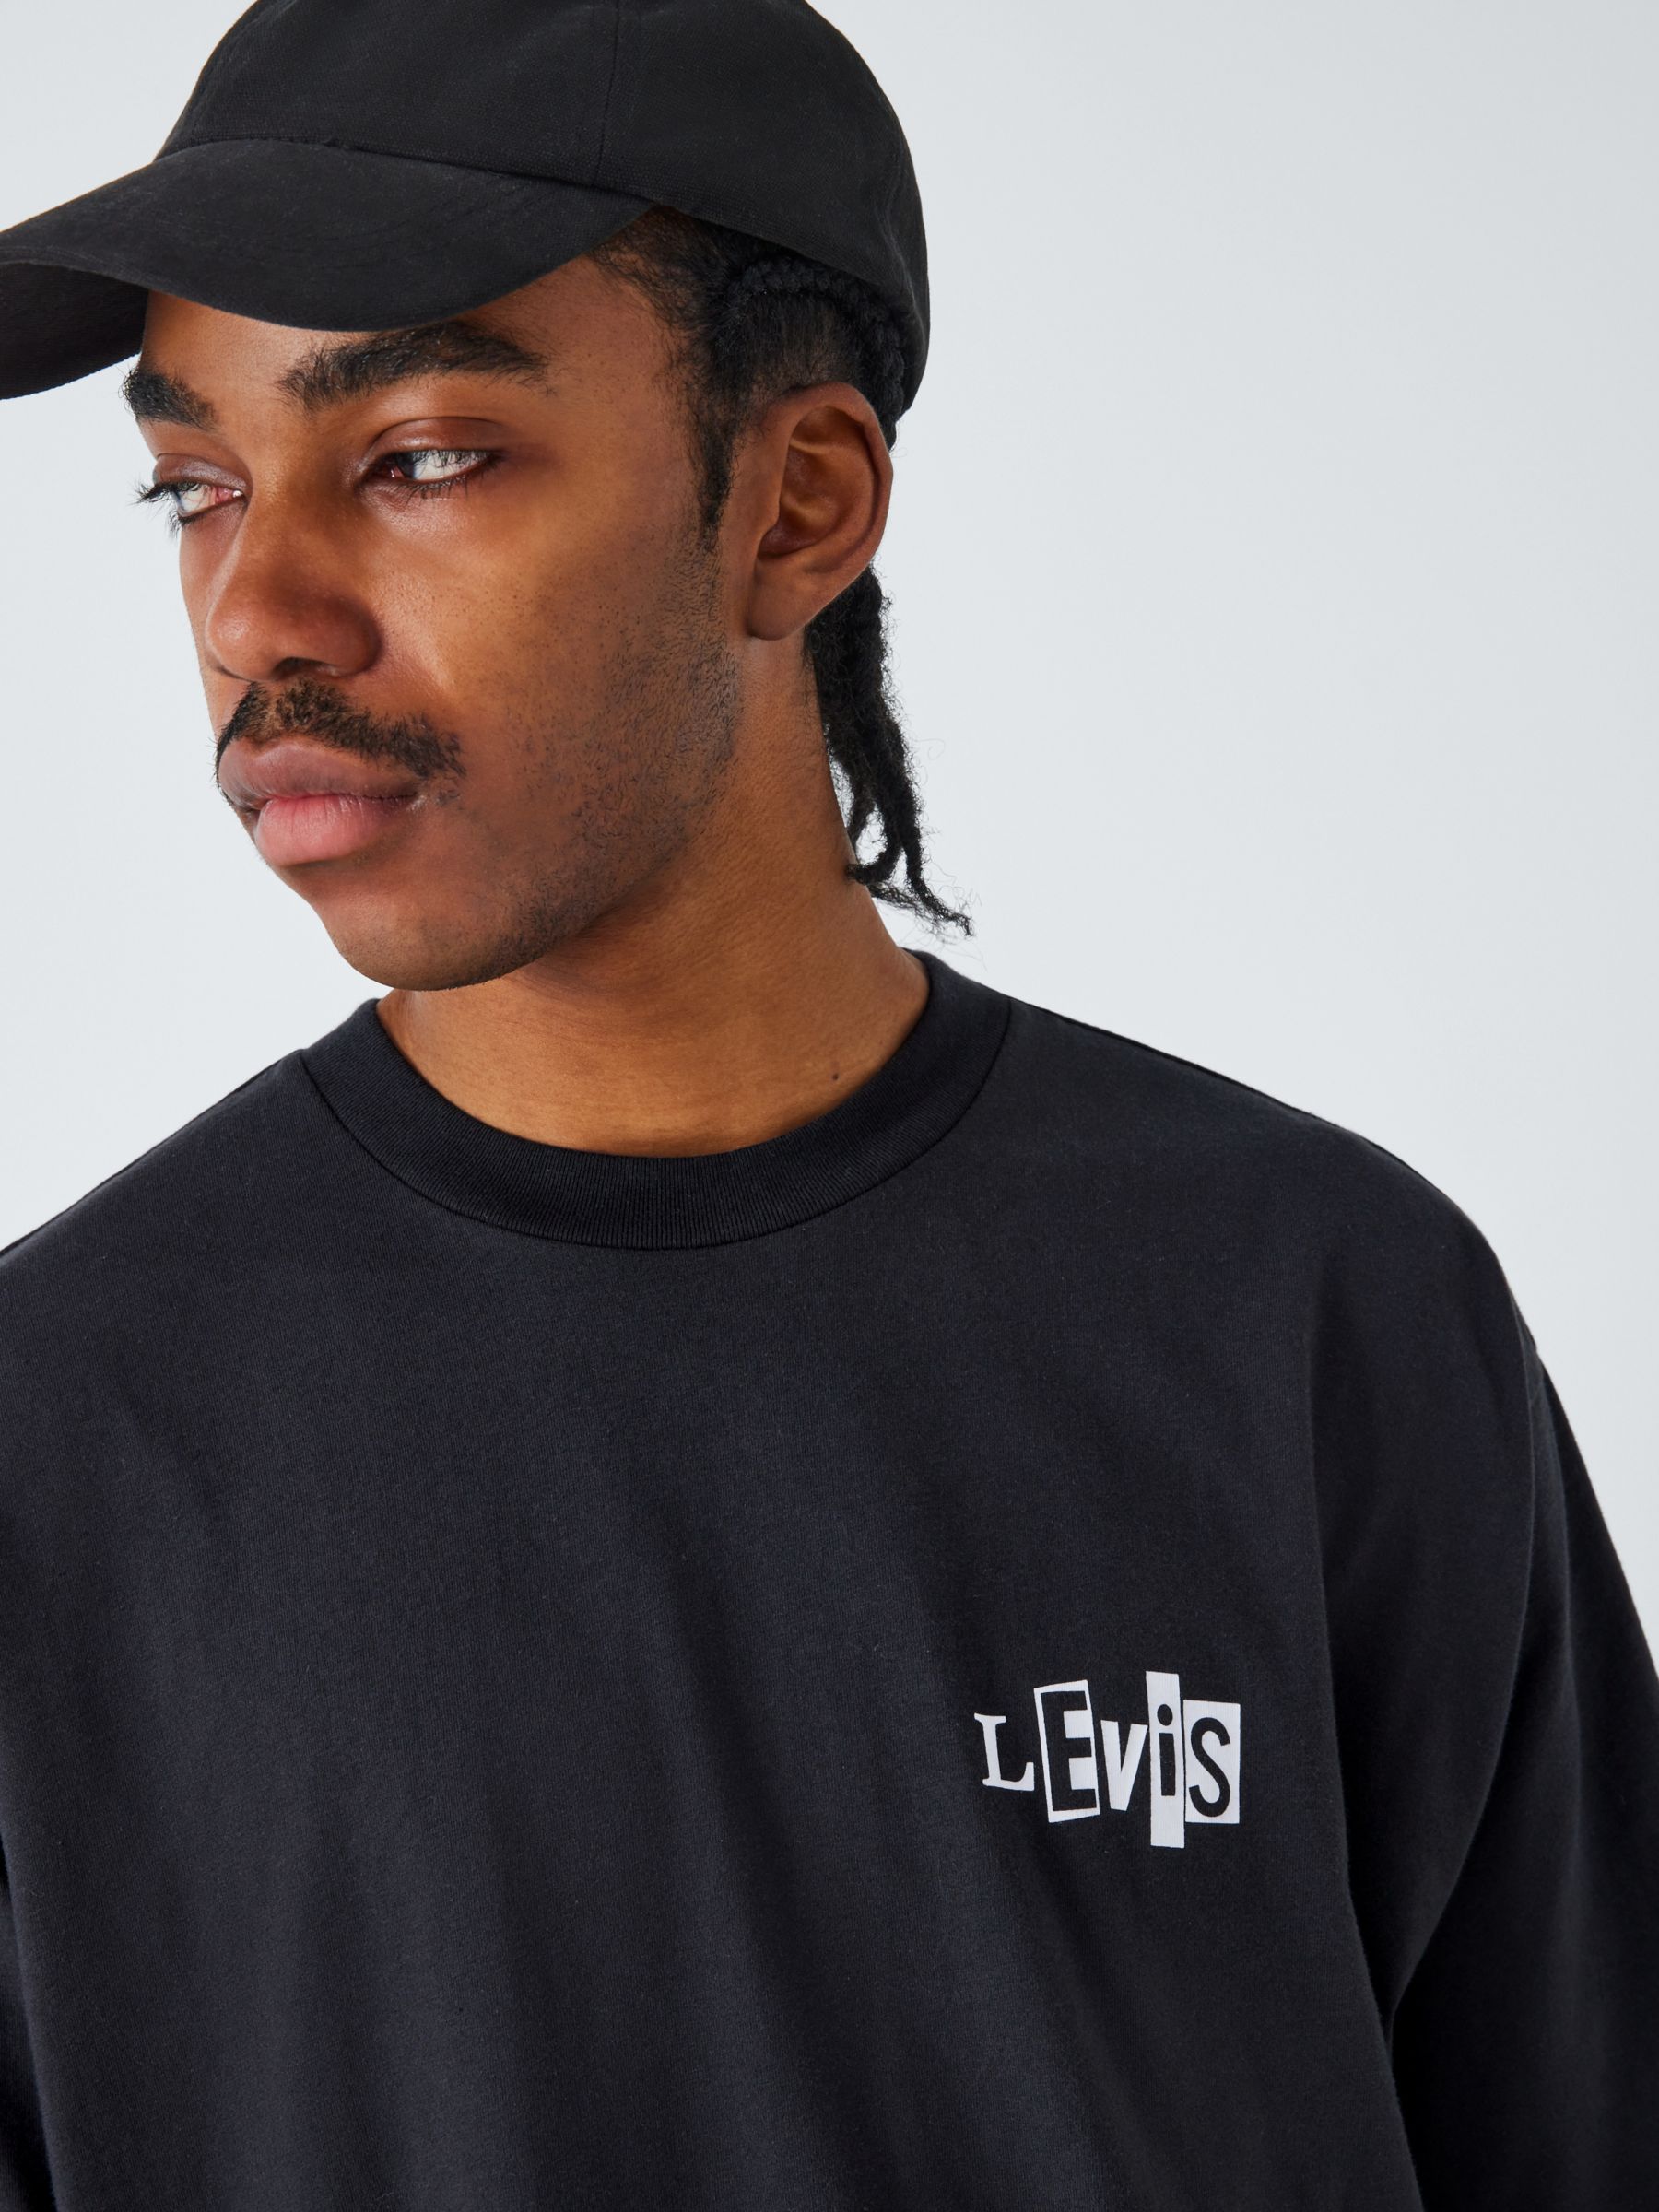 Levi's Skate Graph T-Shirt, Black, S